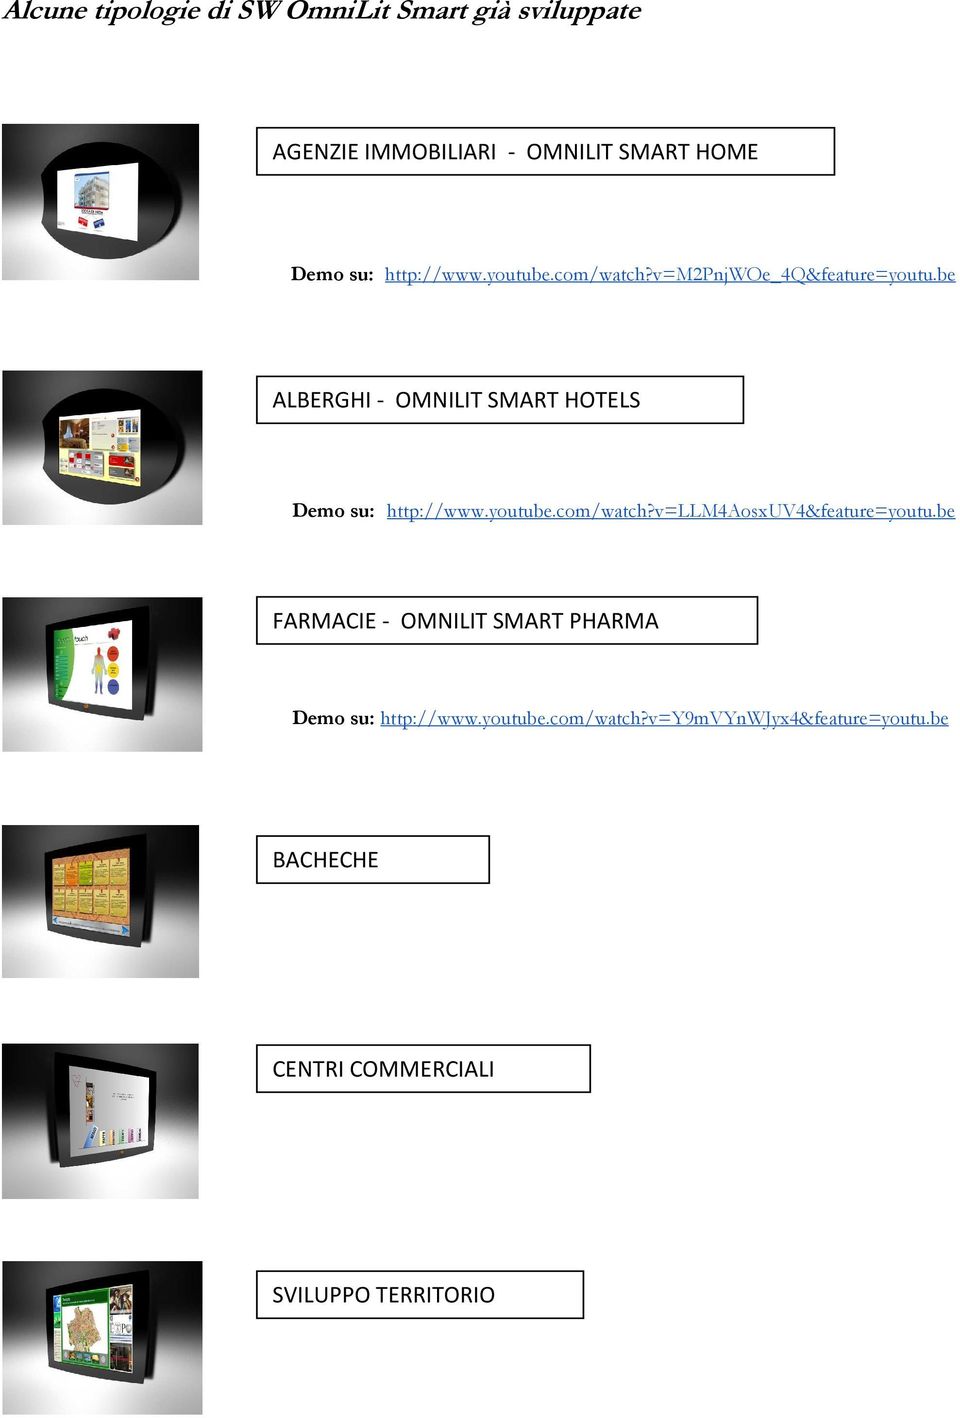 be ALBERGHI - OMNILIT SMART HOTELS Demo su: http://www.youtube.com/watch?v=llm4aosxuv4&feature=youtu.